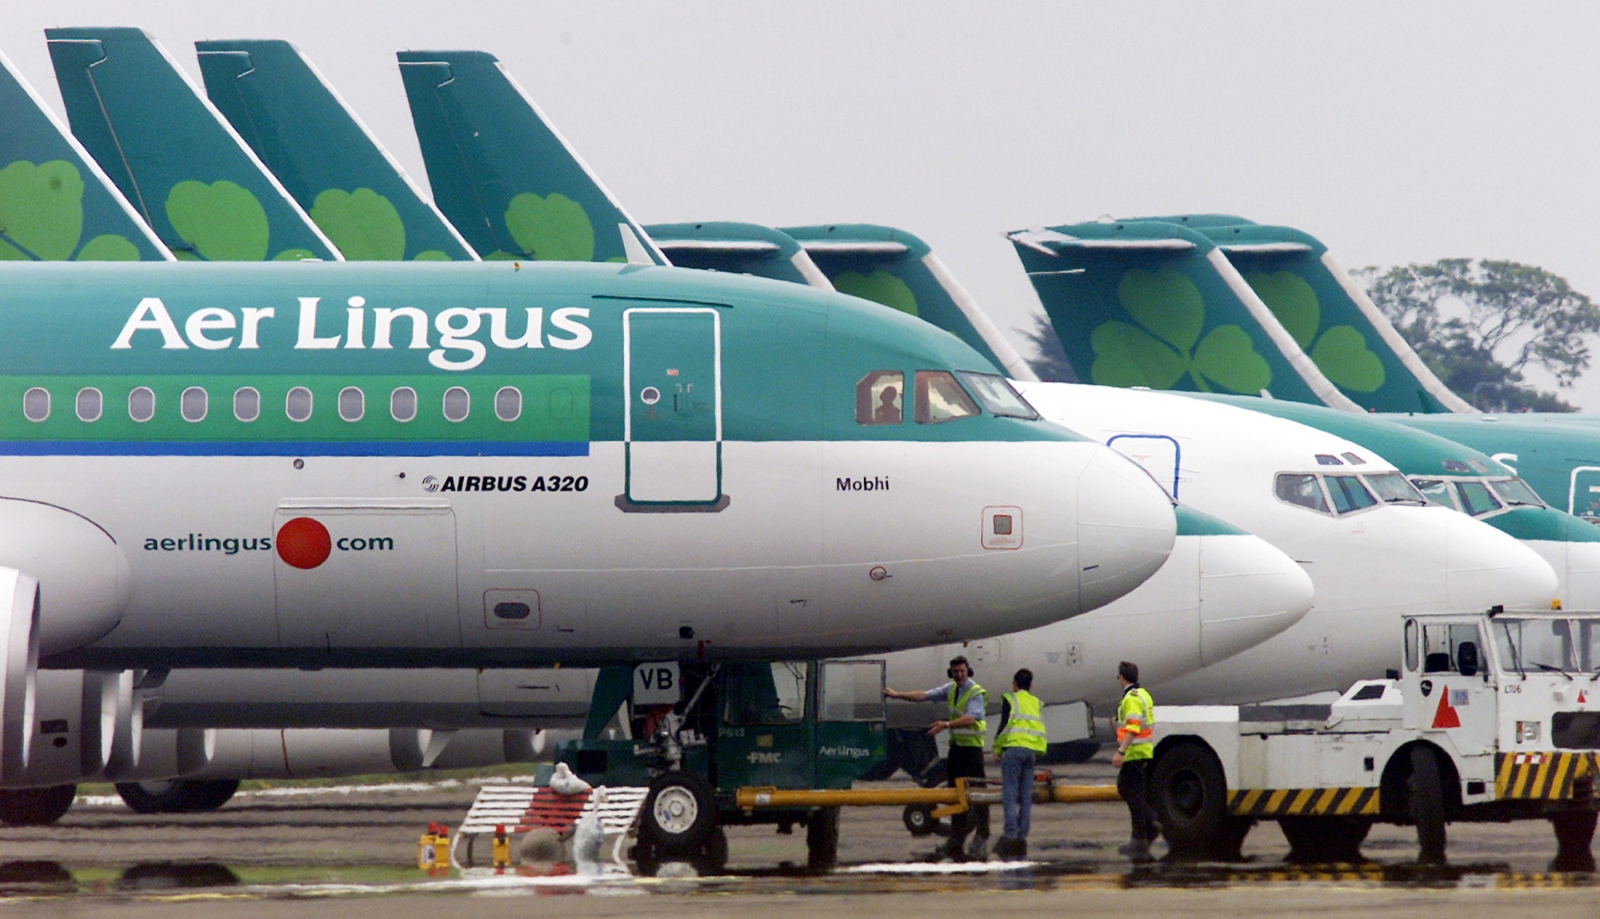 aer lingus flights to ireland from new york uk